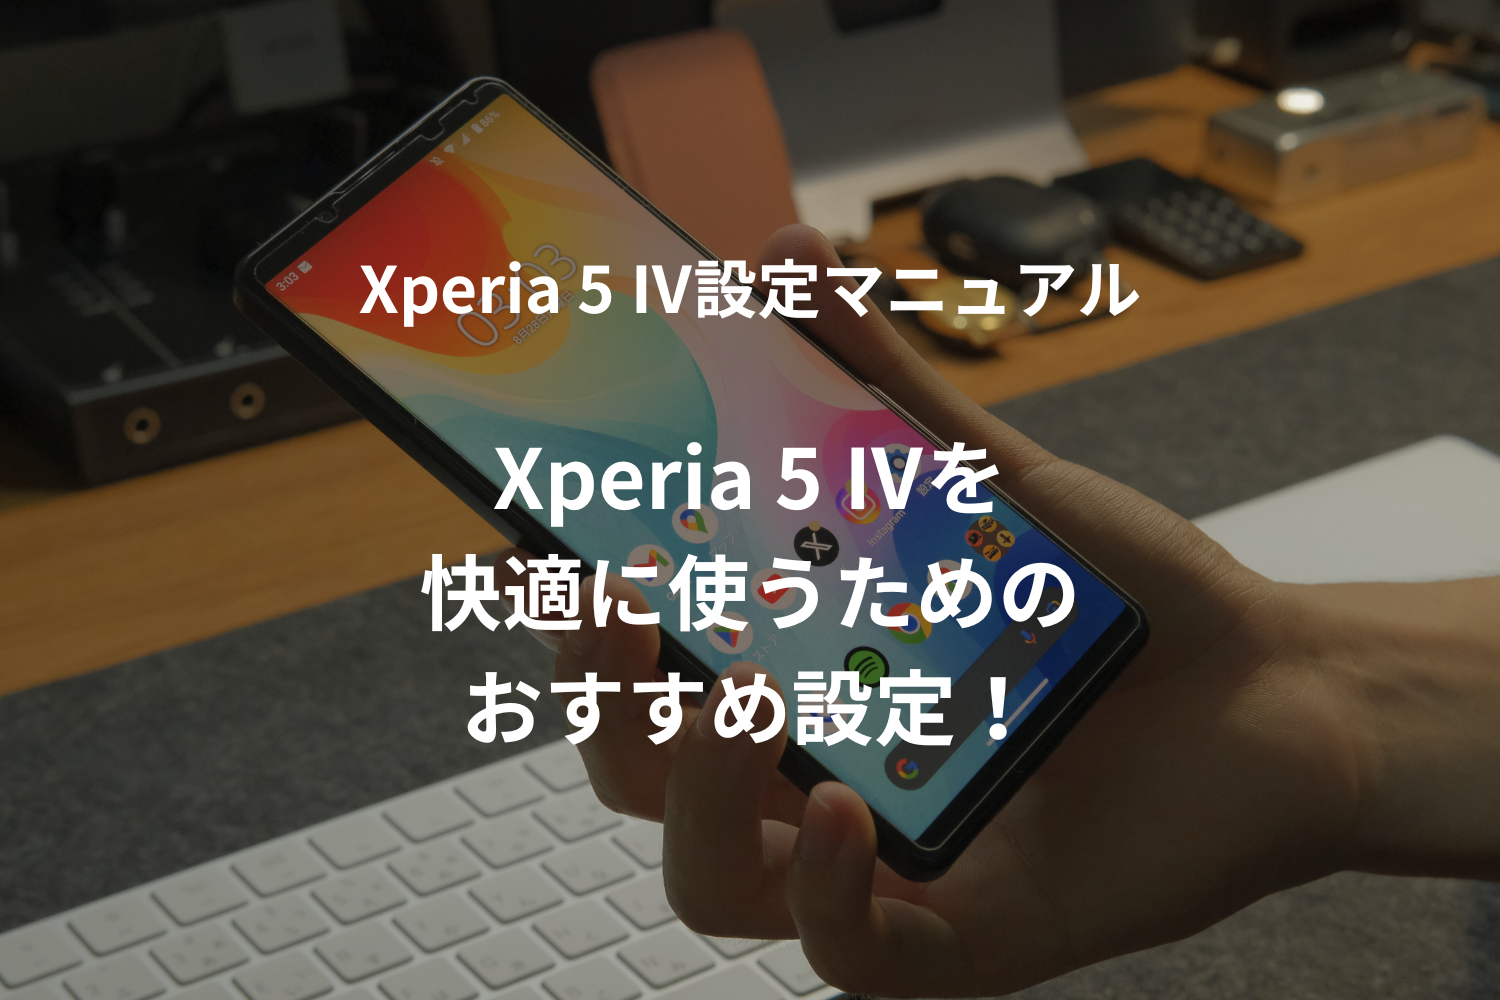 xperia-5-Ⅳ-setup-information